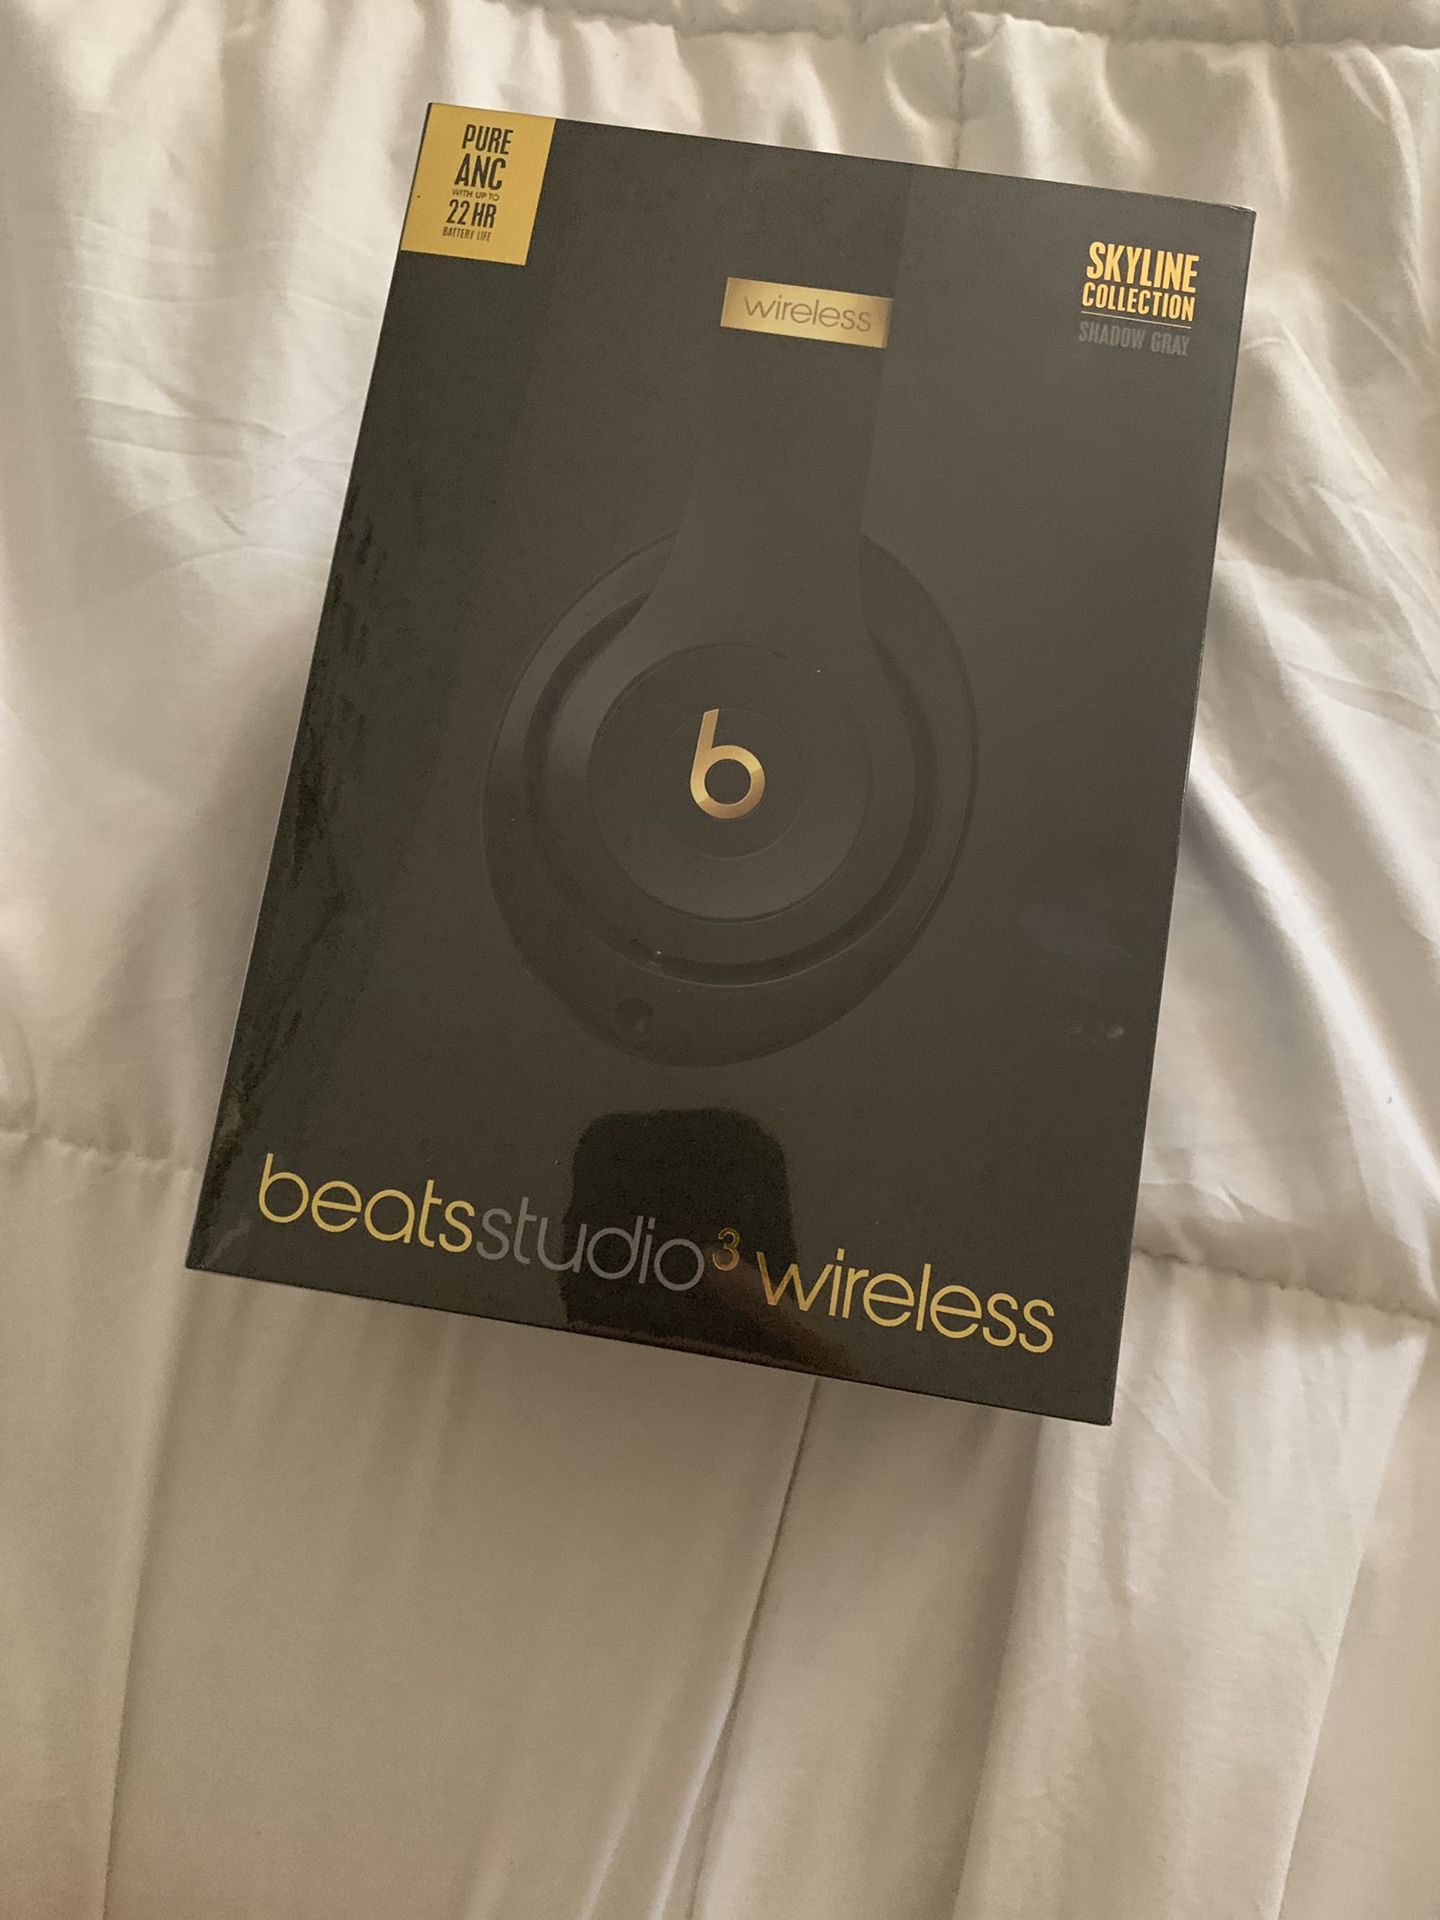 Beats studio3 wireless